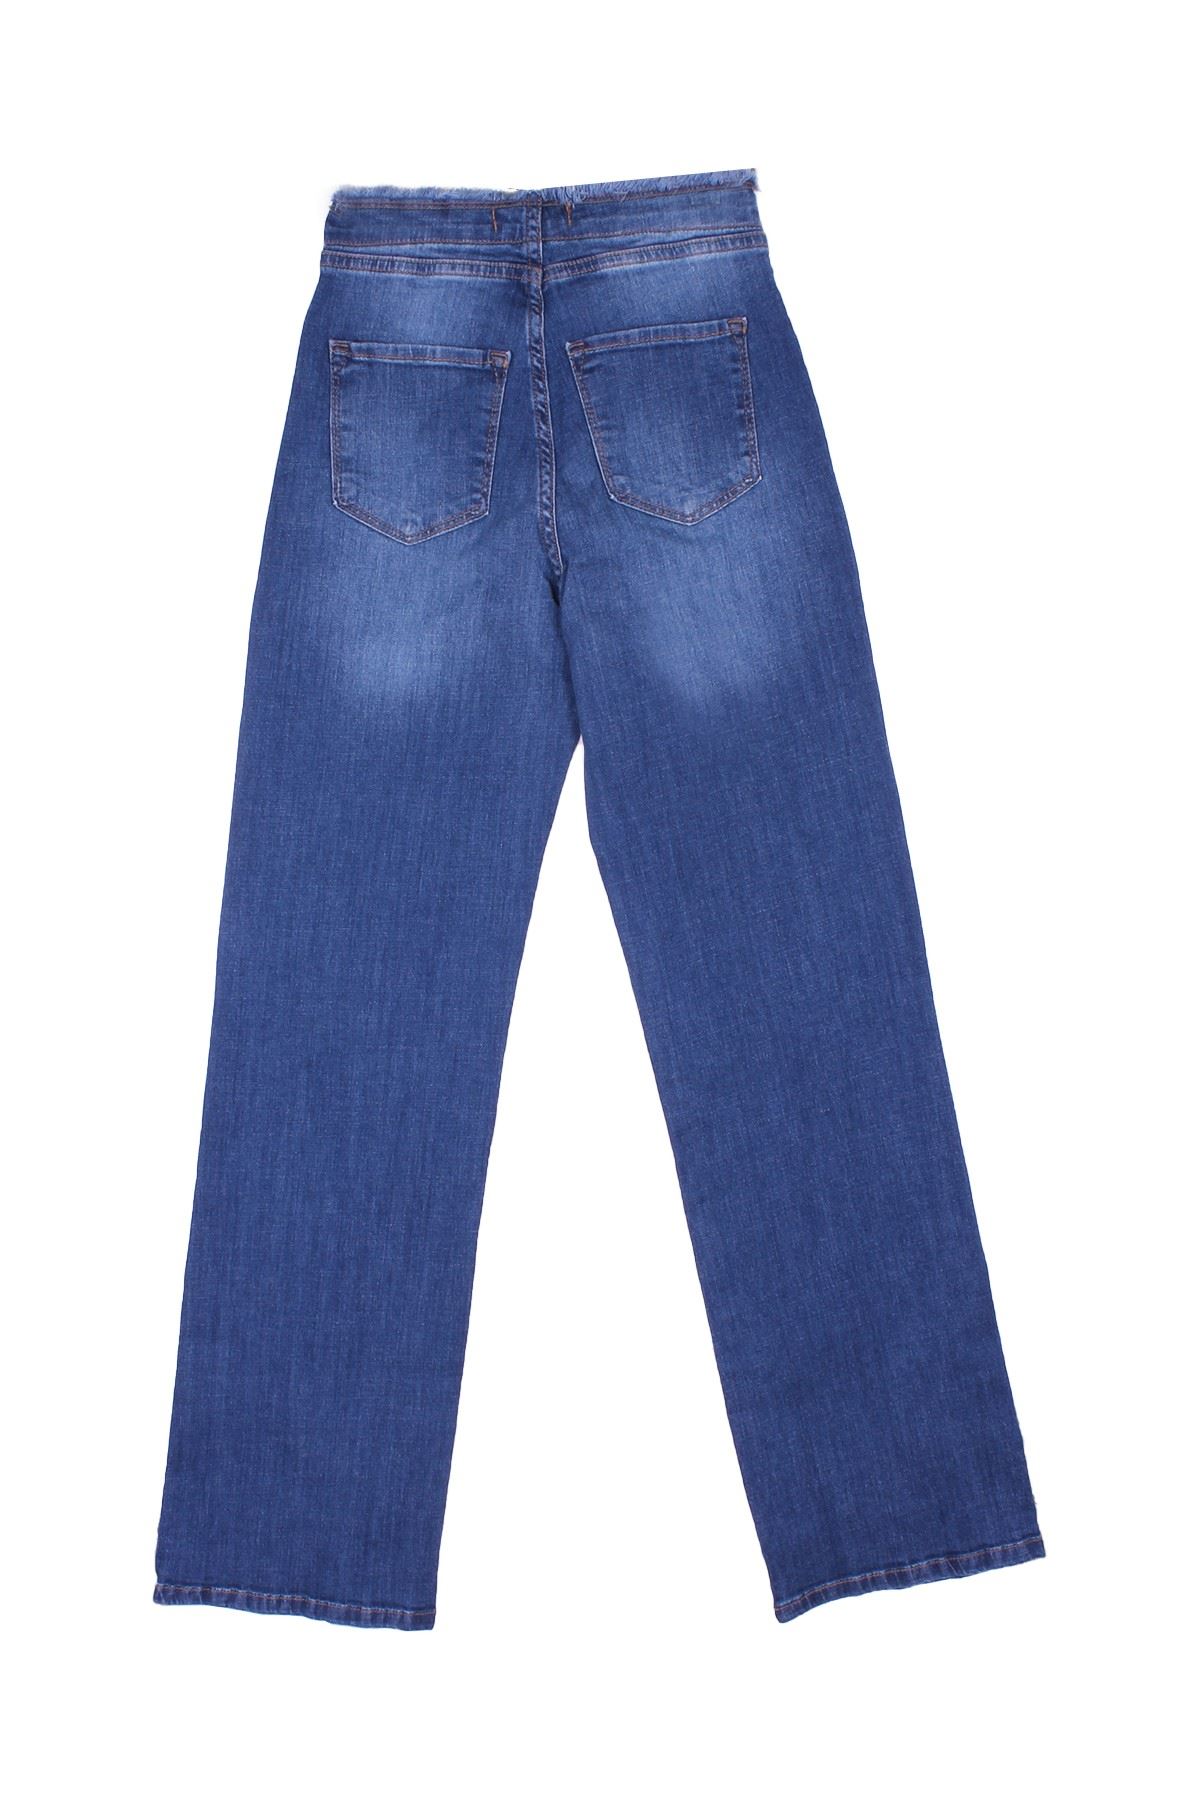 Giyinsen Kadın Mavi Jean Pantolon - 23KD52000011